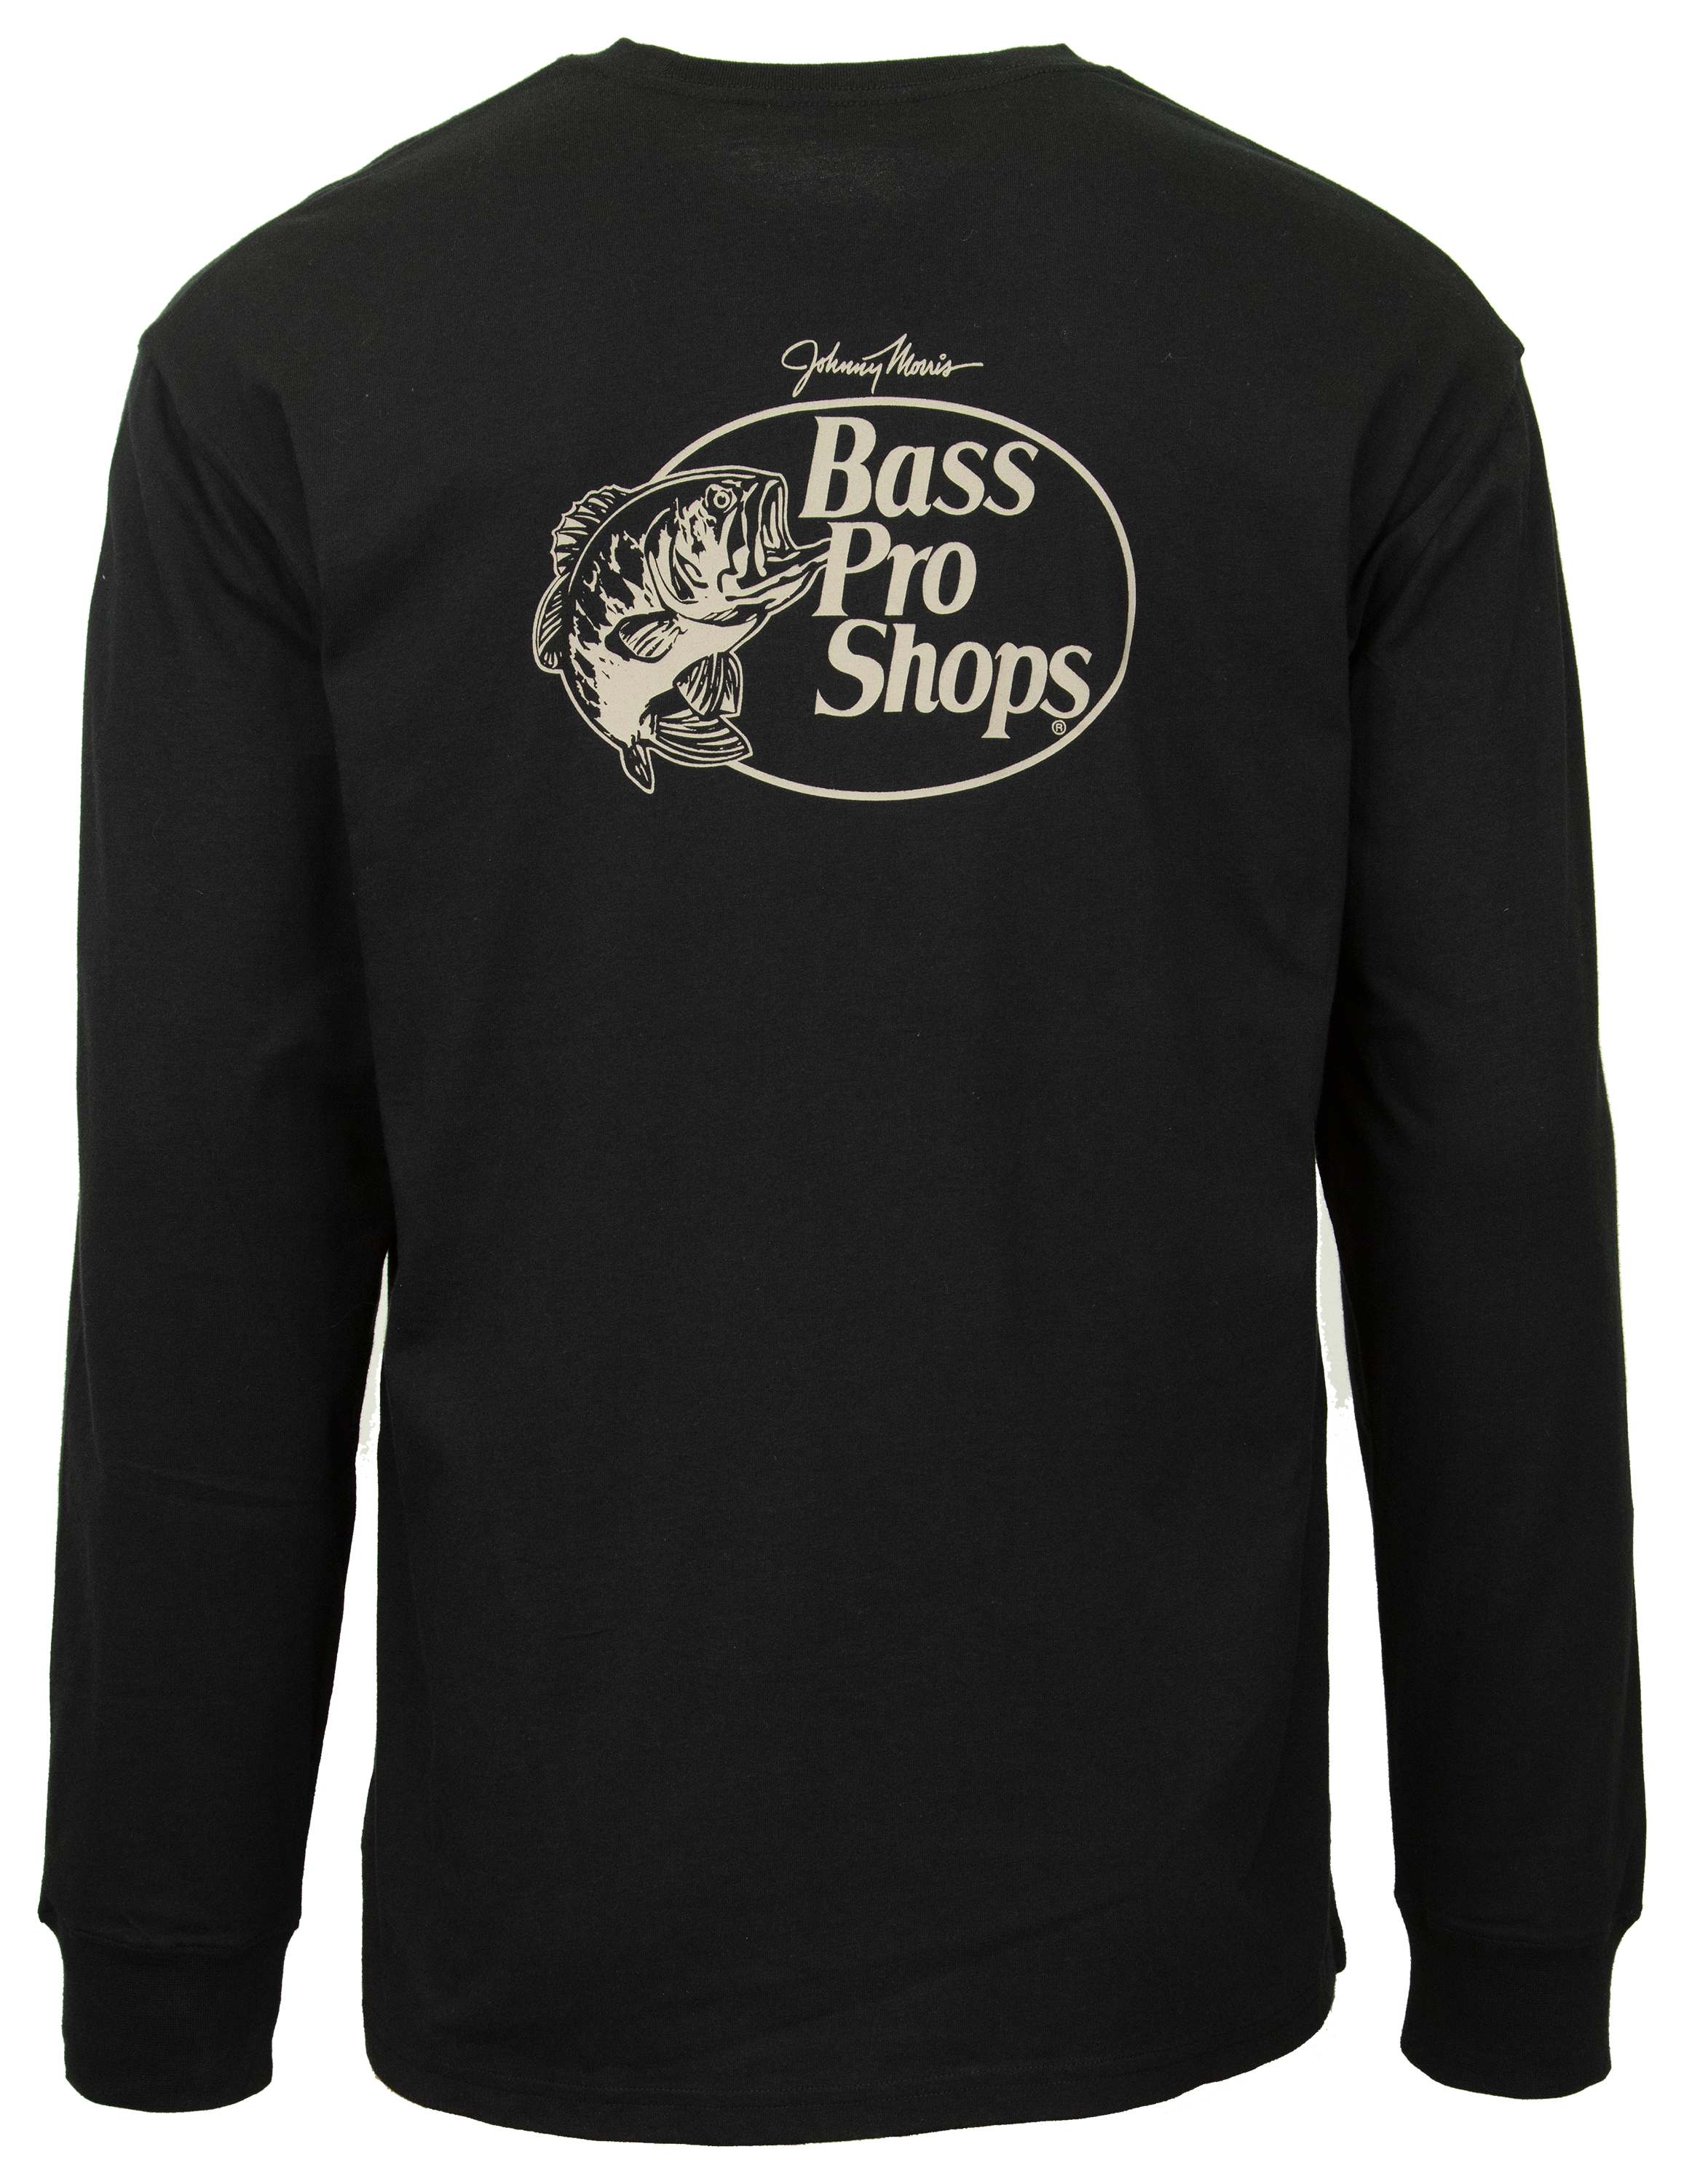 Bass Pro Shops Original Logo Printed Long-Sleeve T-Shirt for Men - Slate Blue - L